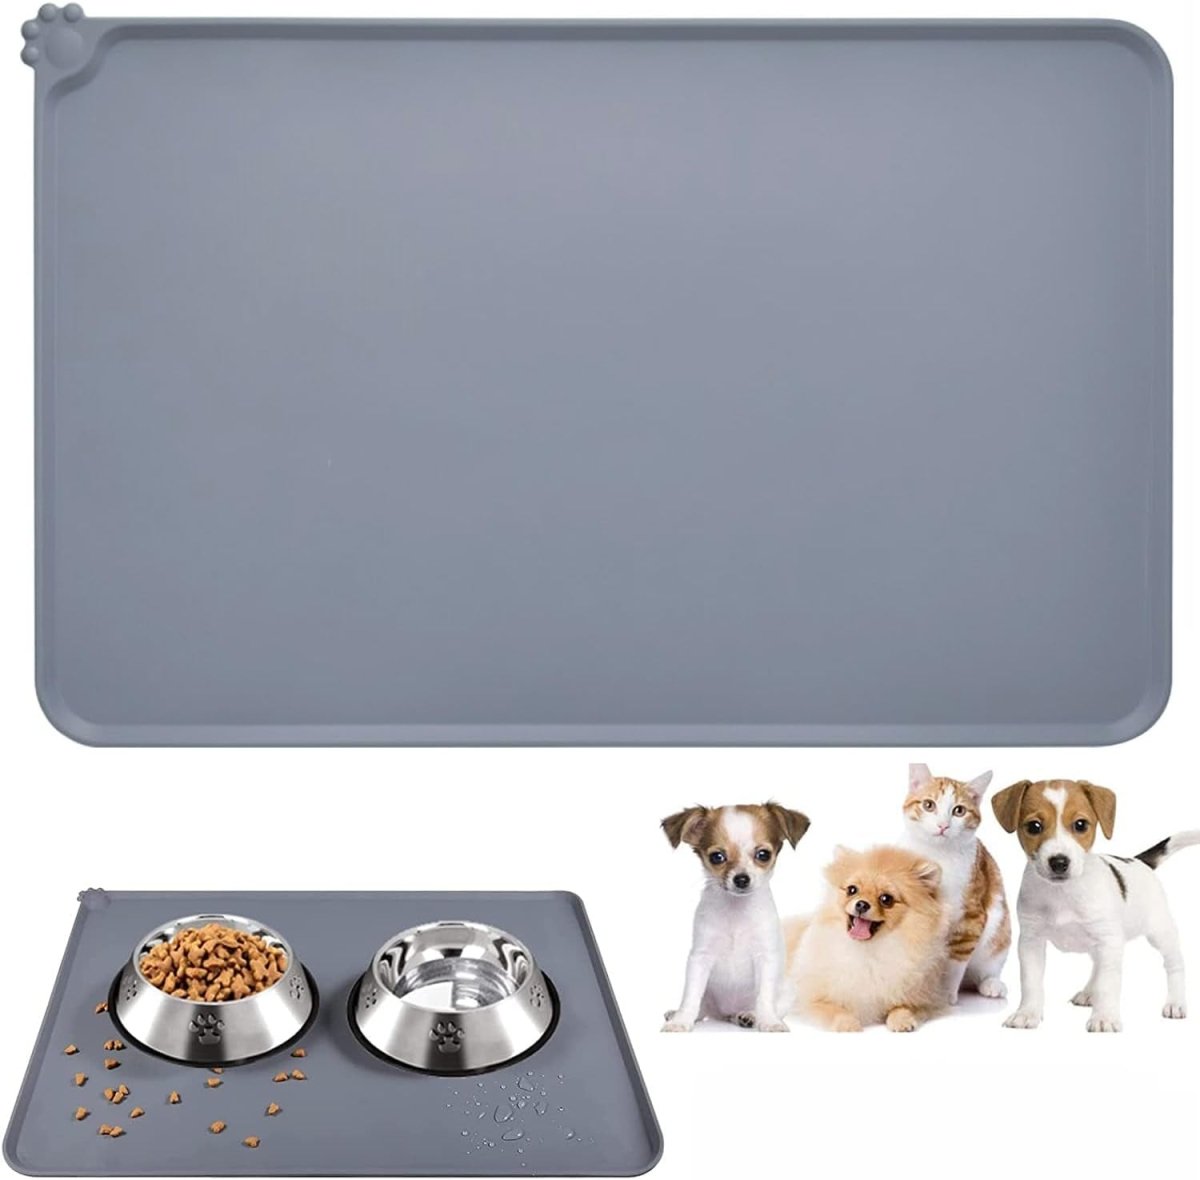 Dog Food Mat, Silicone Dog Bowl Mat, Non-Slip Cat and Dog Feeding Mat, Waterproof Dog Placemat L (47 * 30) - Slips Away - B0B8C349PV -